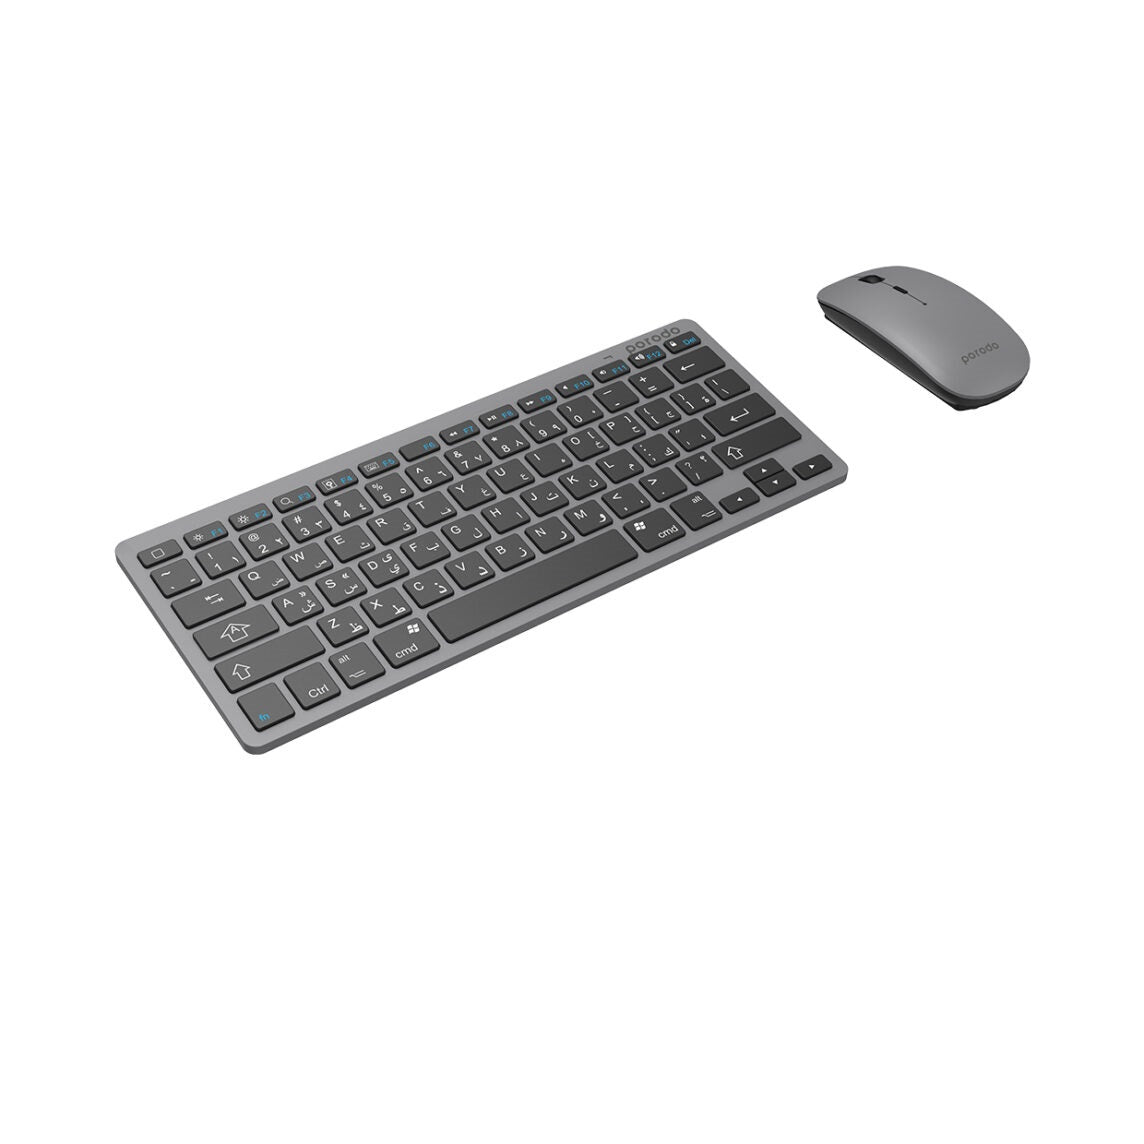 Porodo Wireless Super Slim and Portable Bluetooth Keyboard